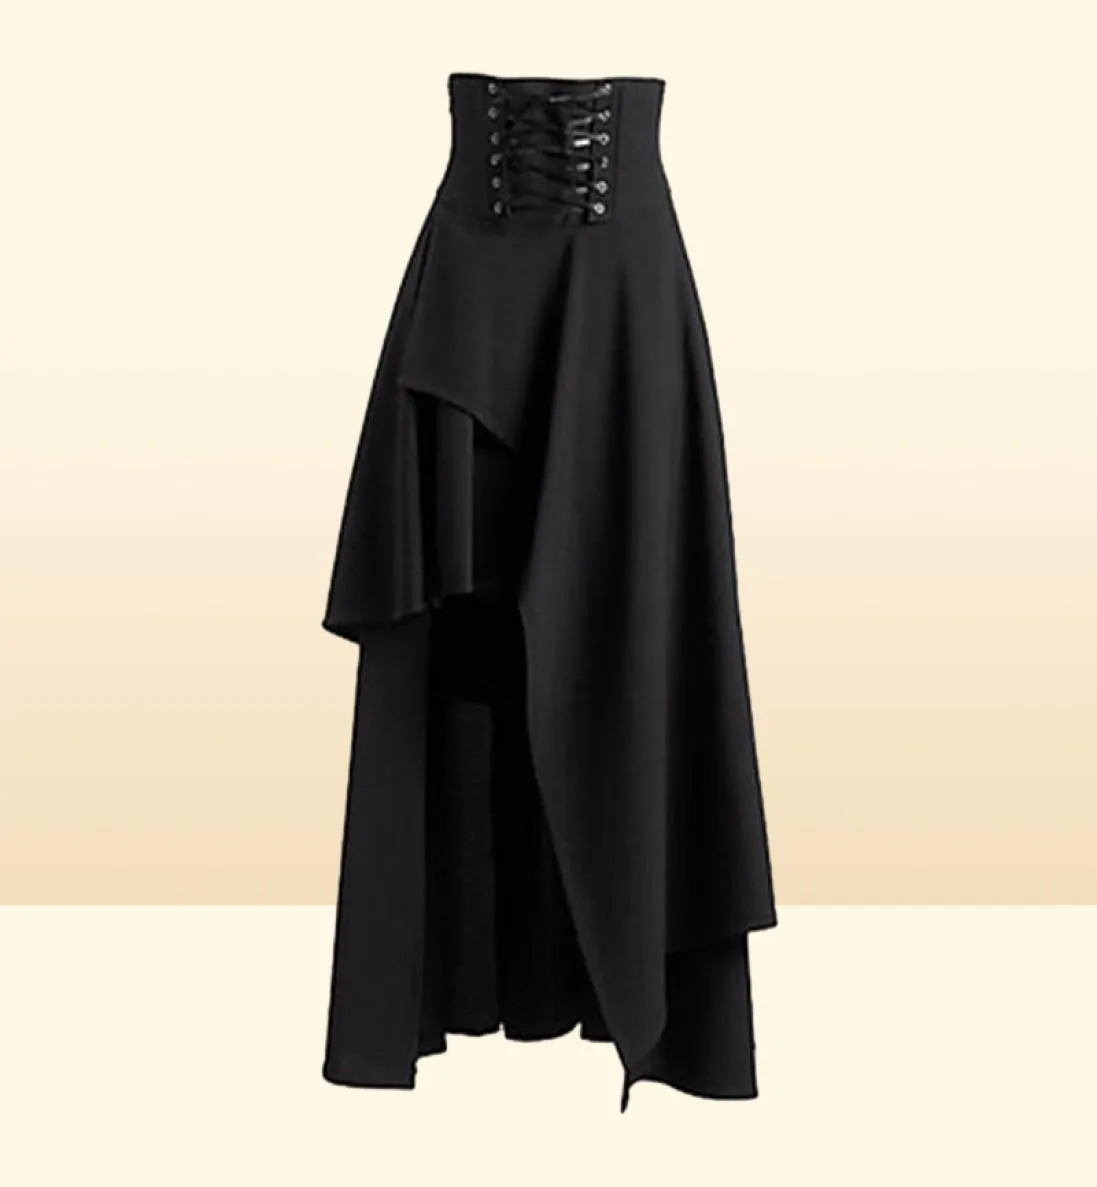 Skirts Medieval Woman Vintage Gothic Skirt Pirate Halloween Costume Renaissance Steampunk High Waist3279201